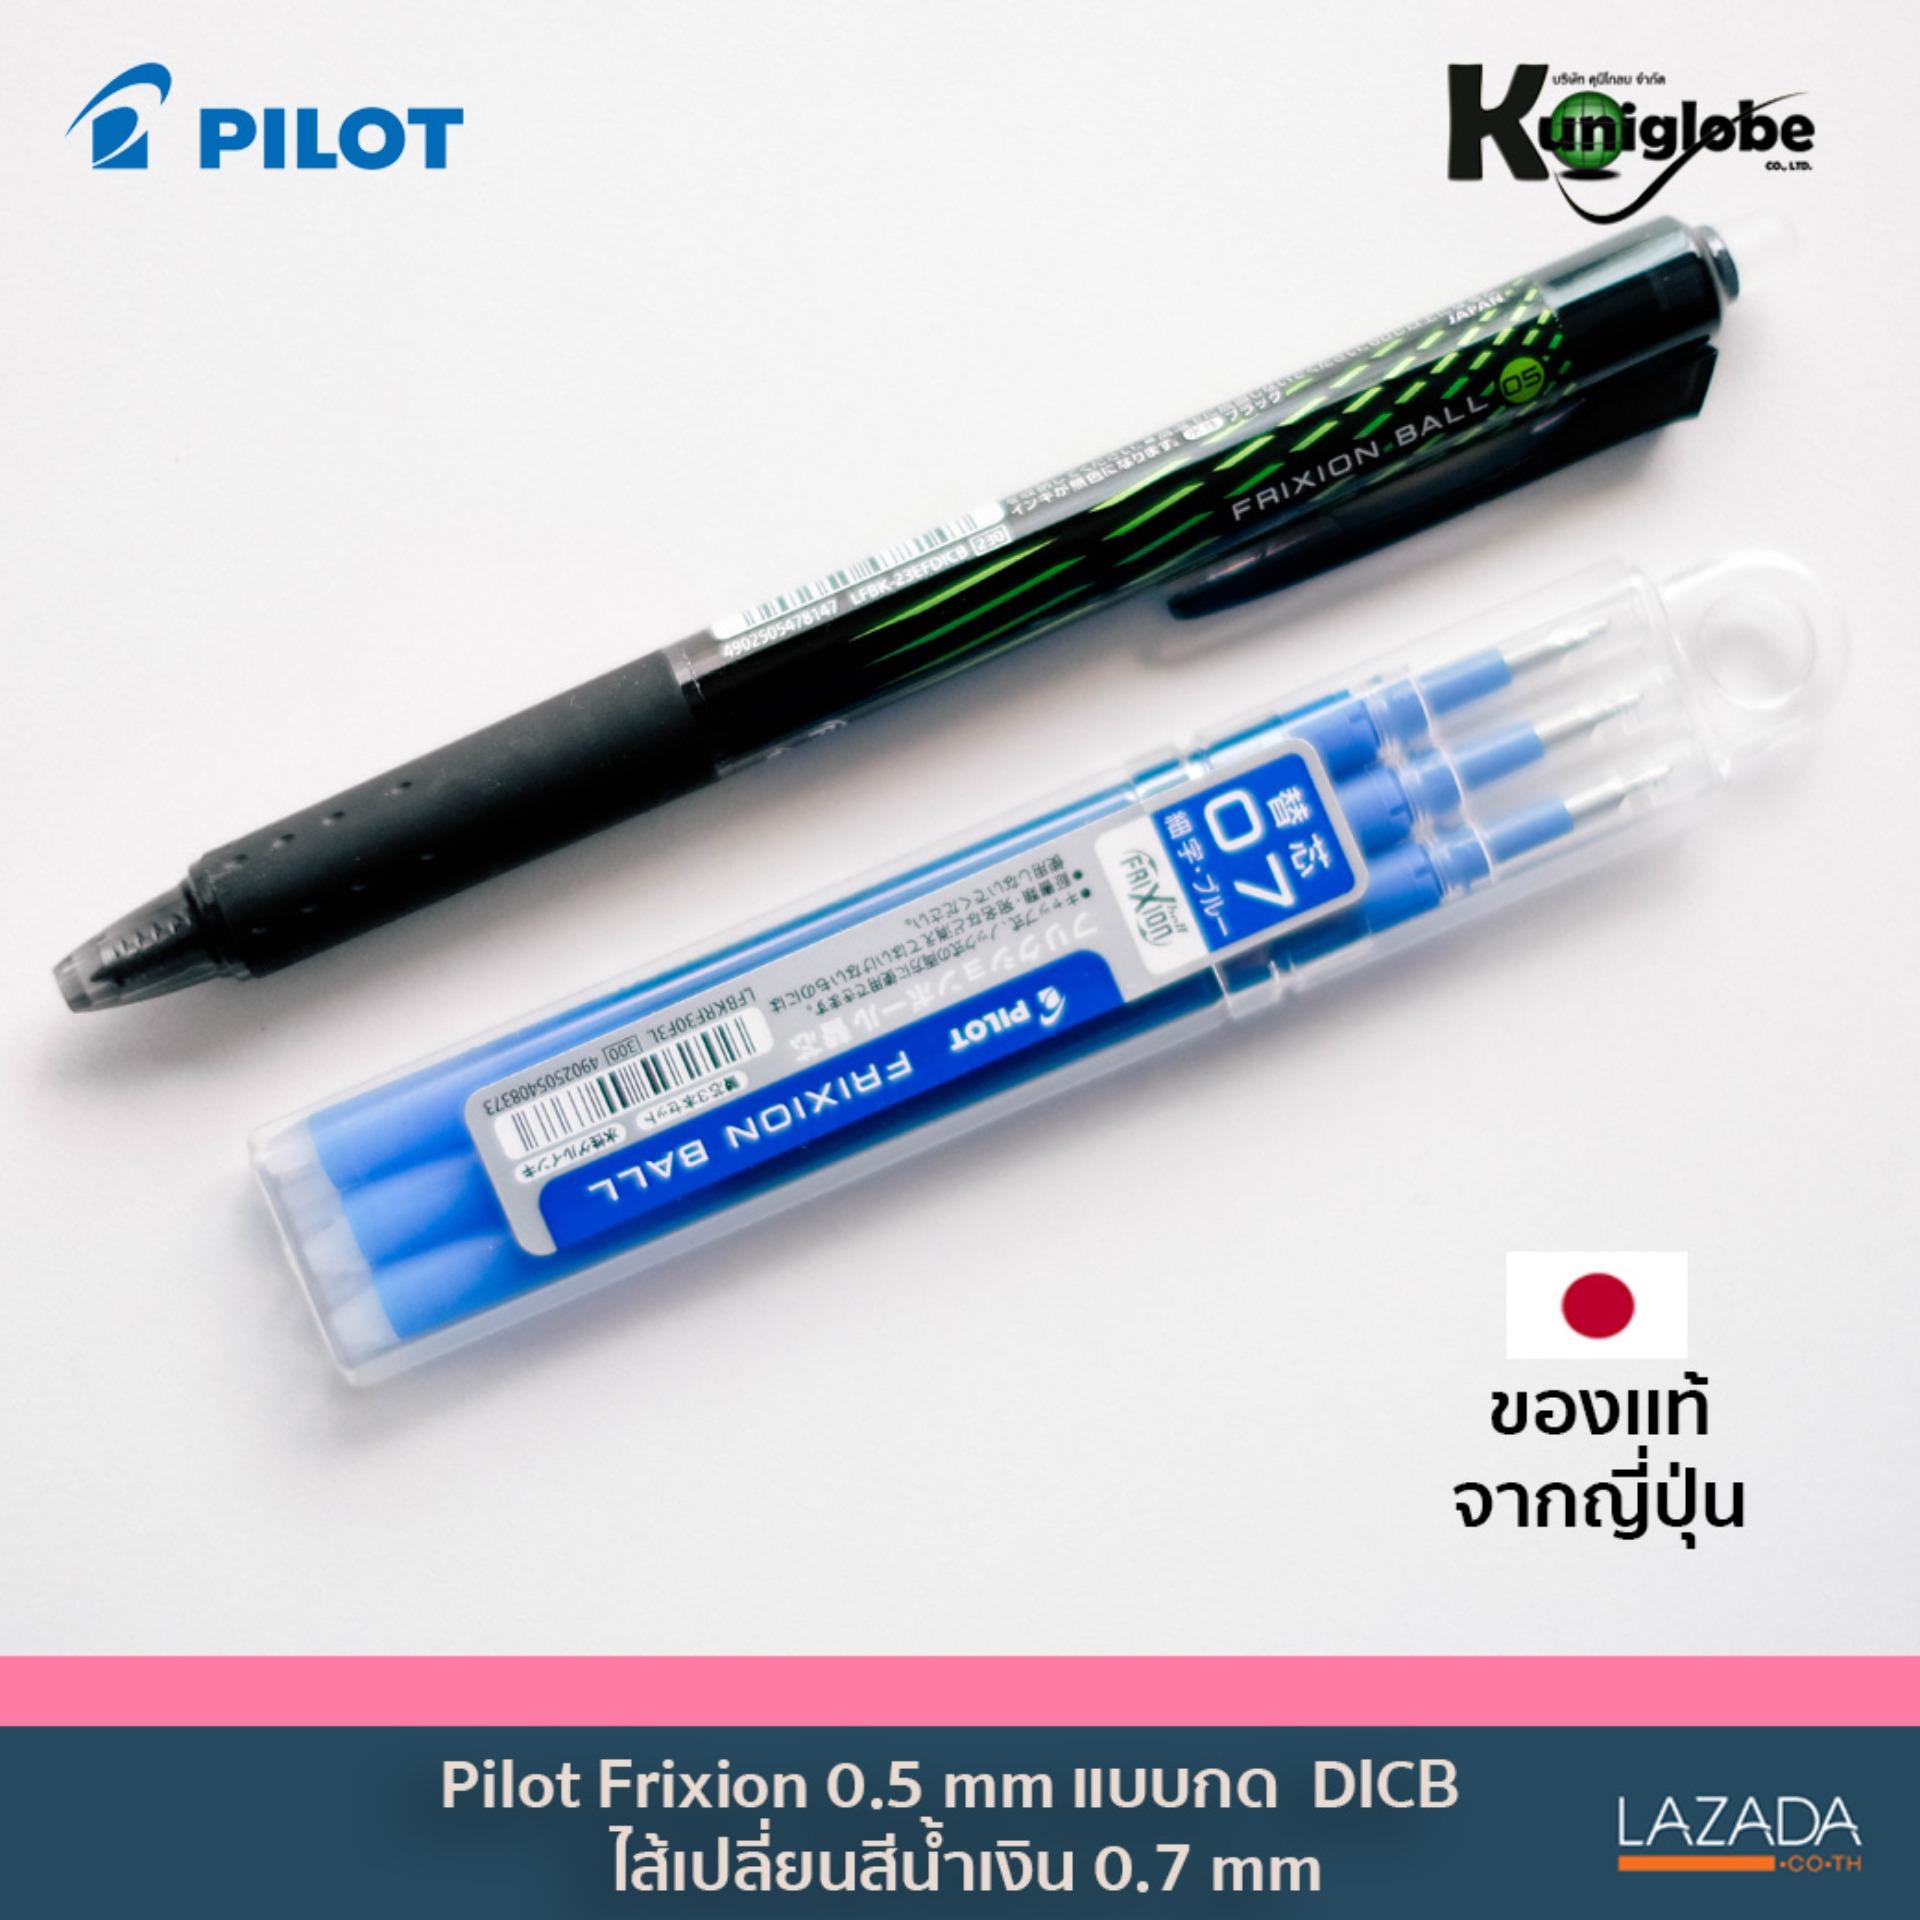 Pilot Frixion 0.5 mm ปากกาลบได้ญี่ปุ่น แบบกด DICB (ไส้สีดำ) + ไส้เปลี่ยนปากกาลบได้ สีน้ำเงิน หัวขนาด 0.7 mm / LFBK-23EFDICB / LFBKRF30F3L / 4902505408373